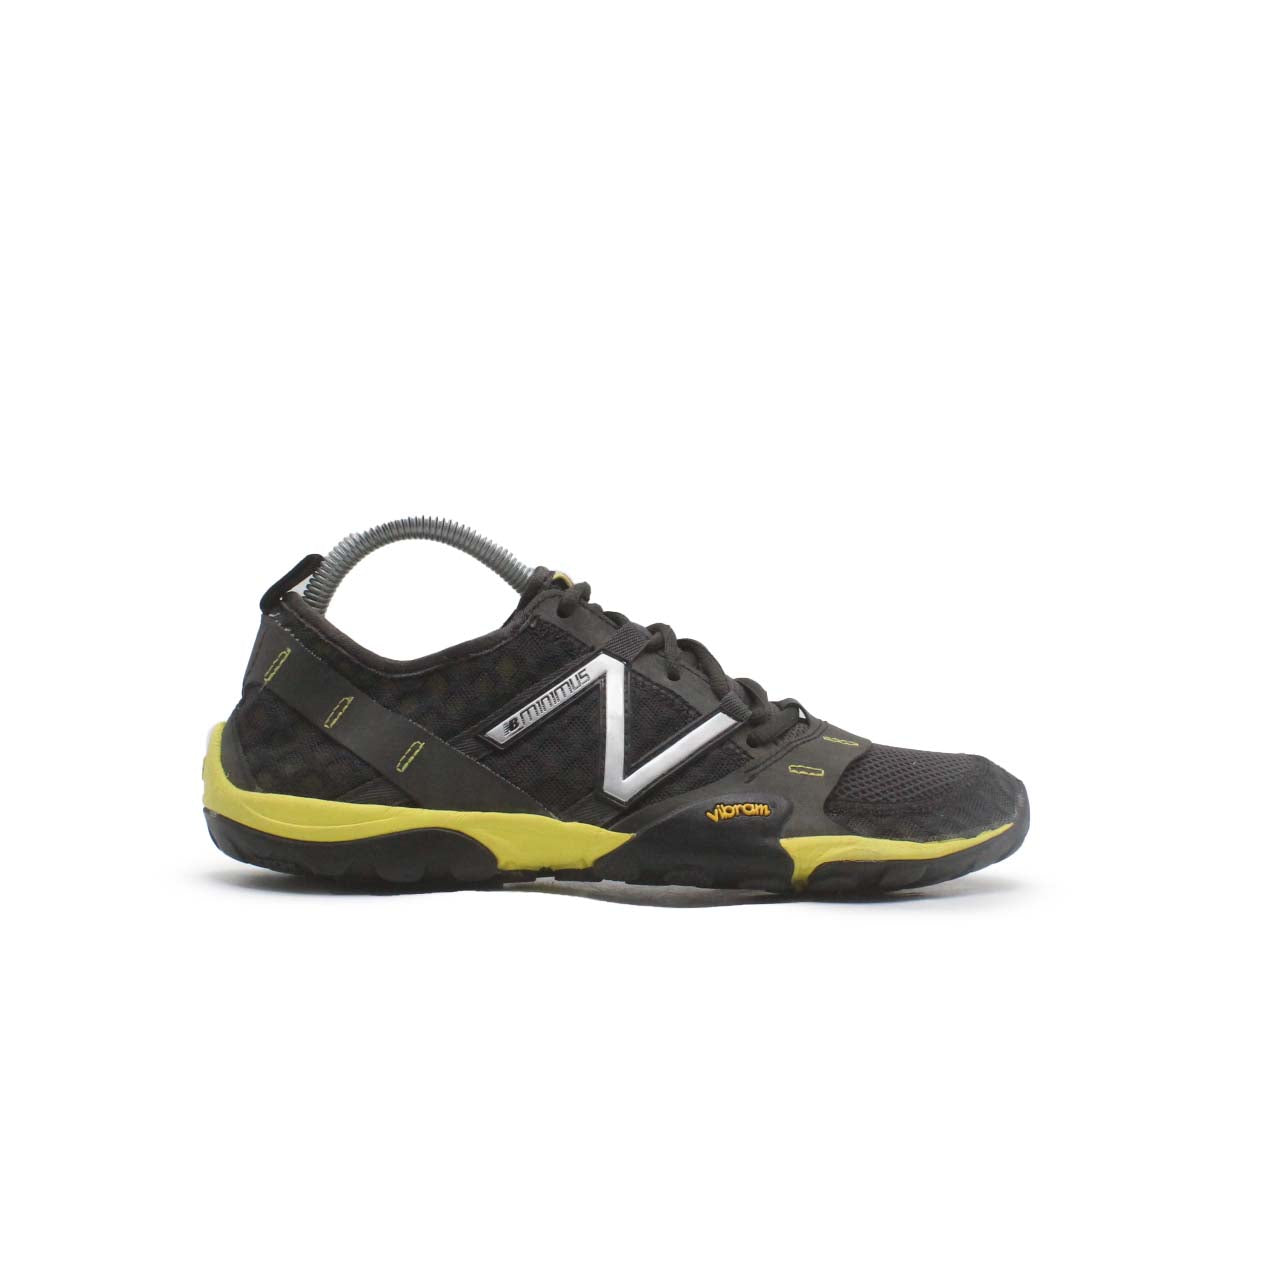 New Balance Men's 10v1 Minimus Trail-Running Shoe